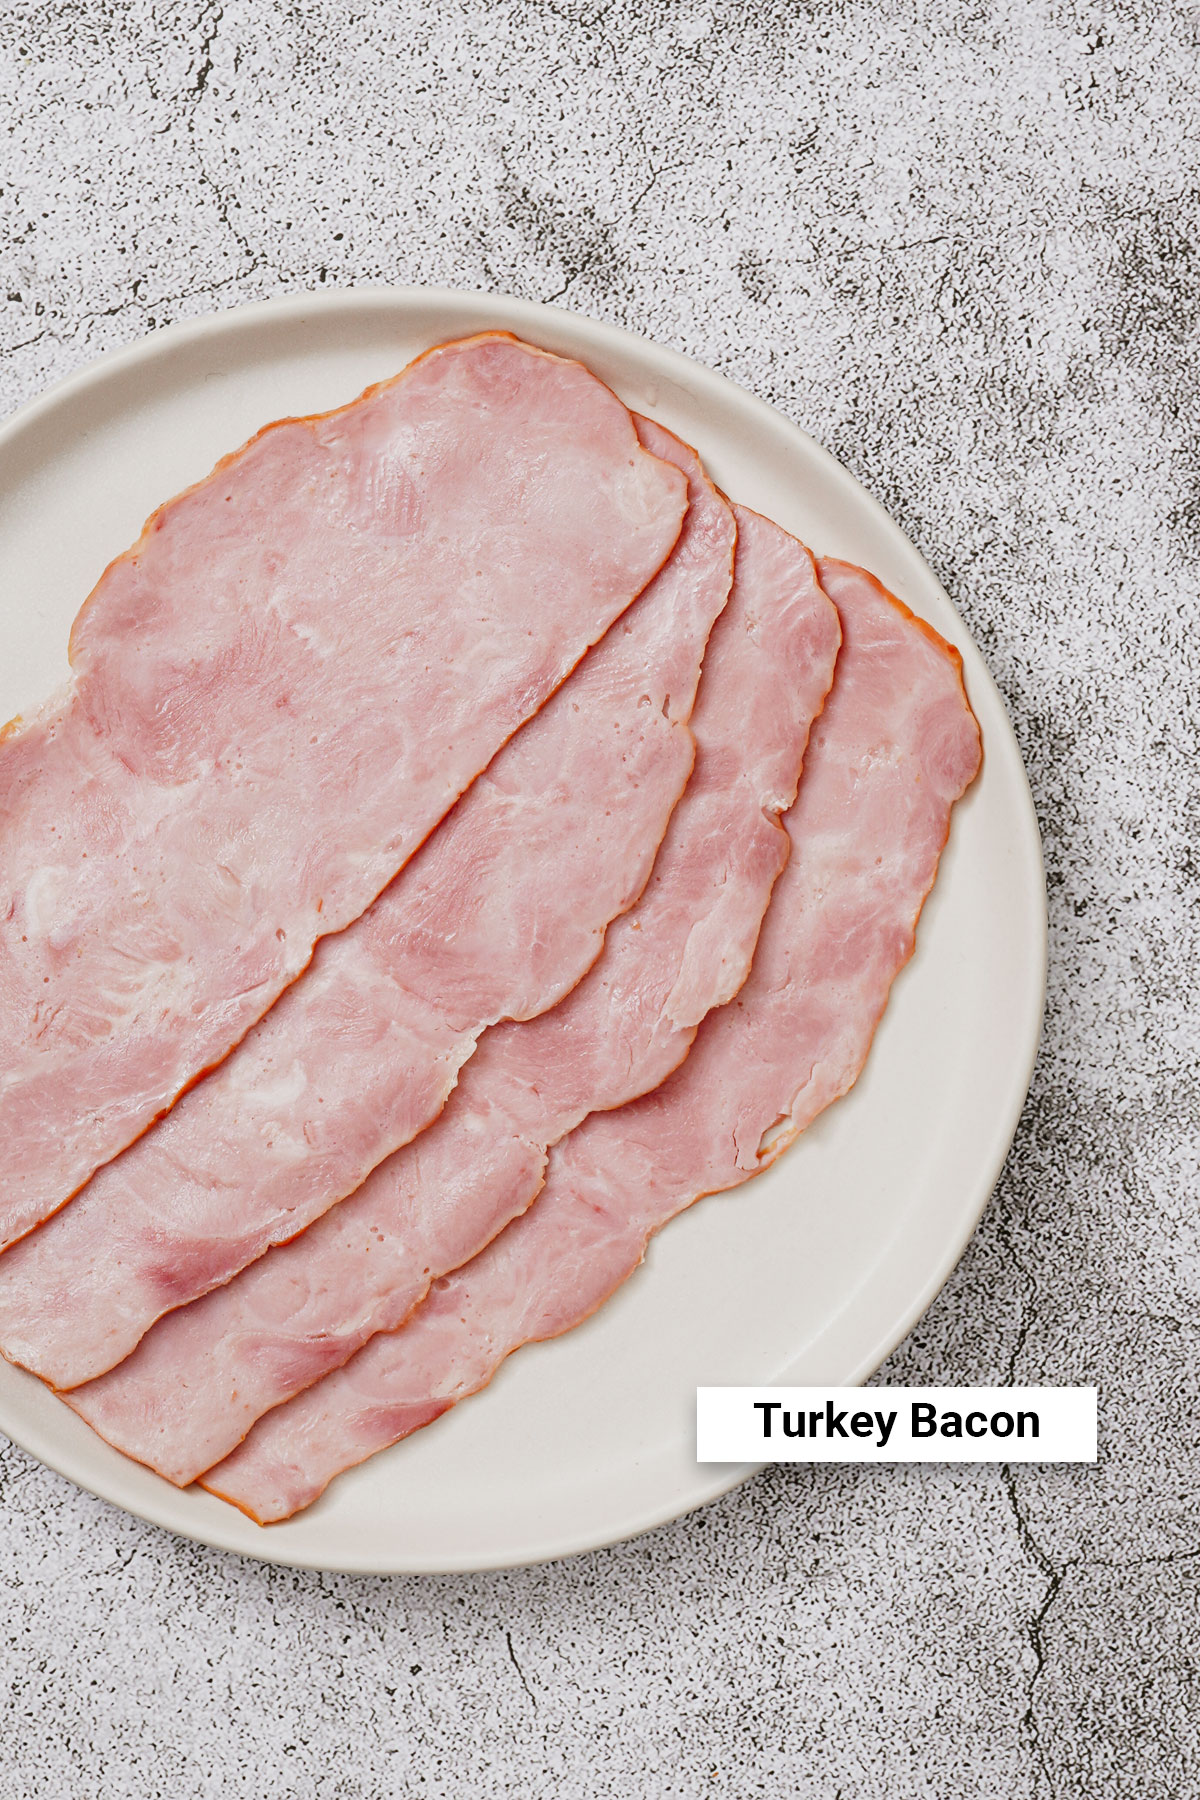 Turkey bacon strips on a white plate